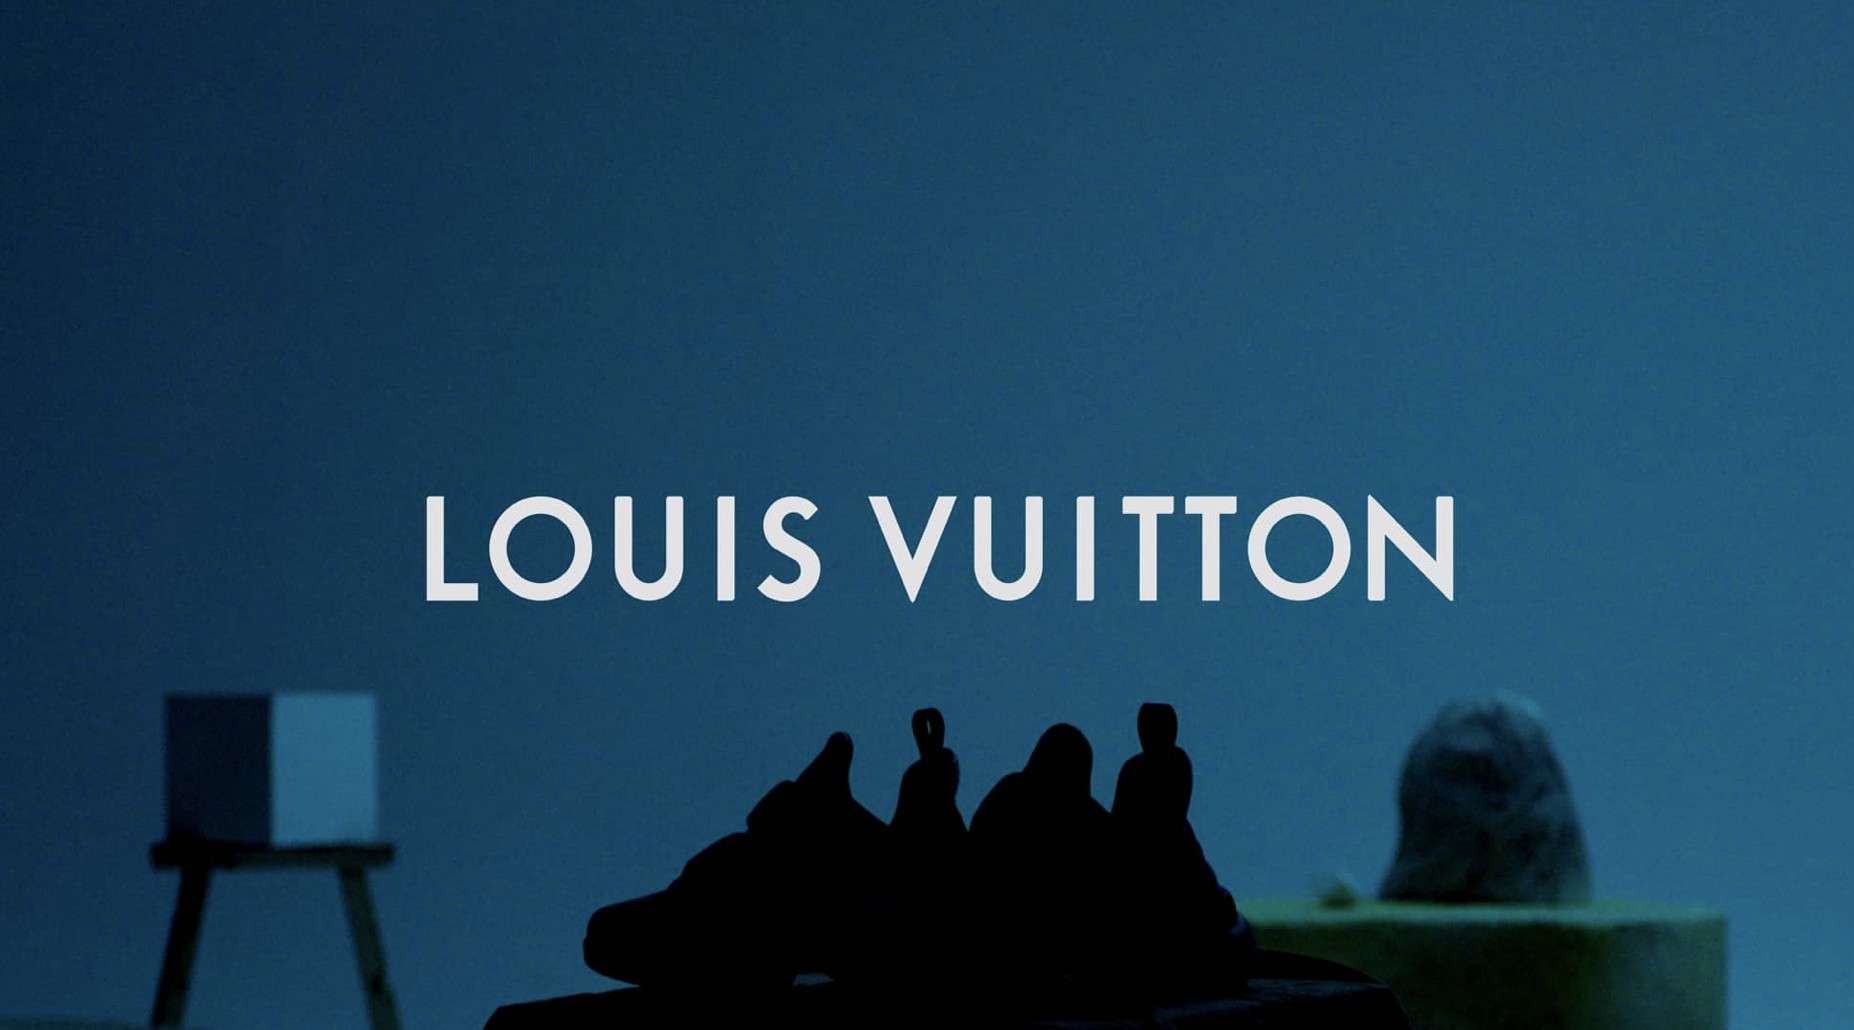 Archlight - Louis Vuitton